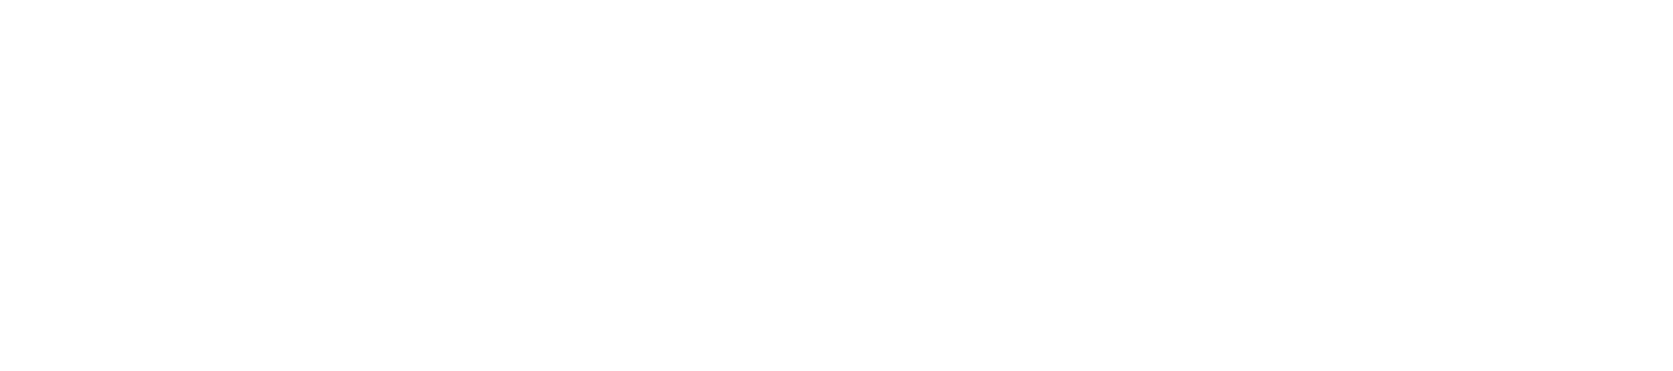 short stacks logo fork and spoon white